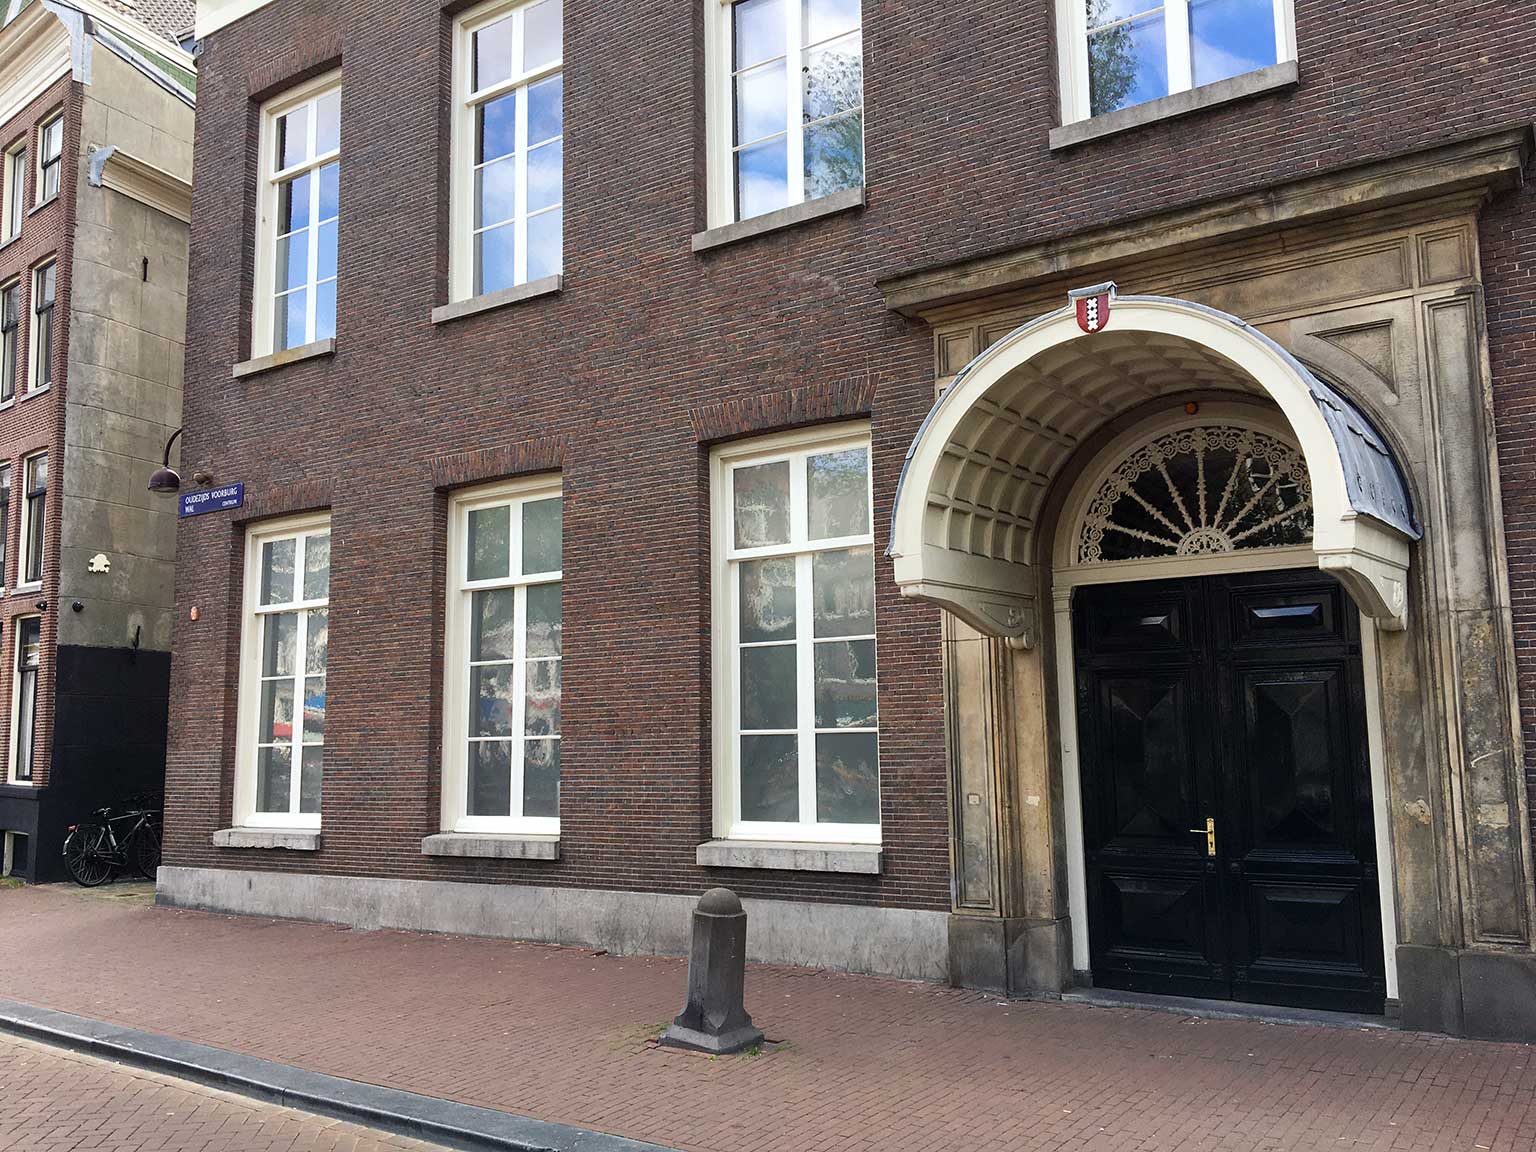 Entrance of the old city hall near Prinsenhofsteeg, Amsterdam